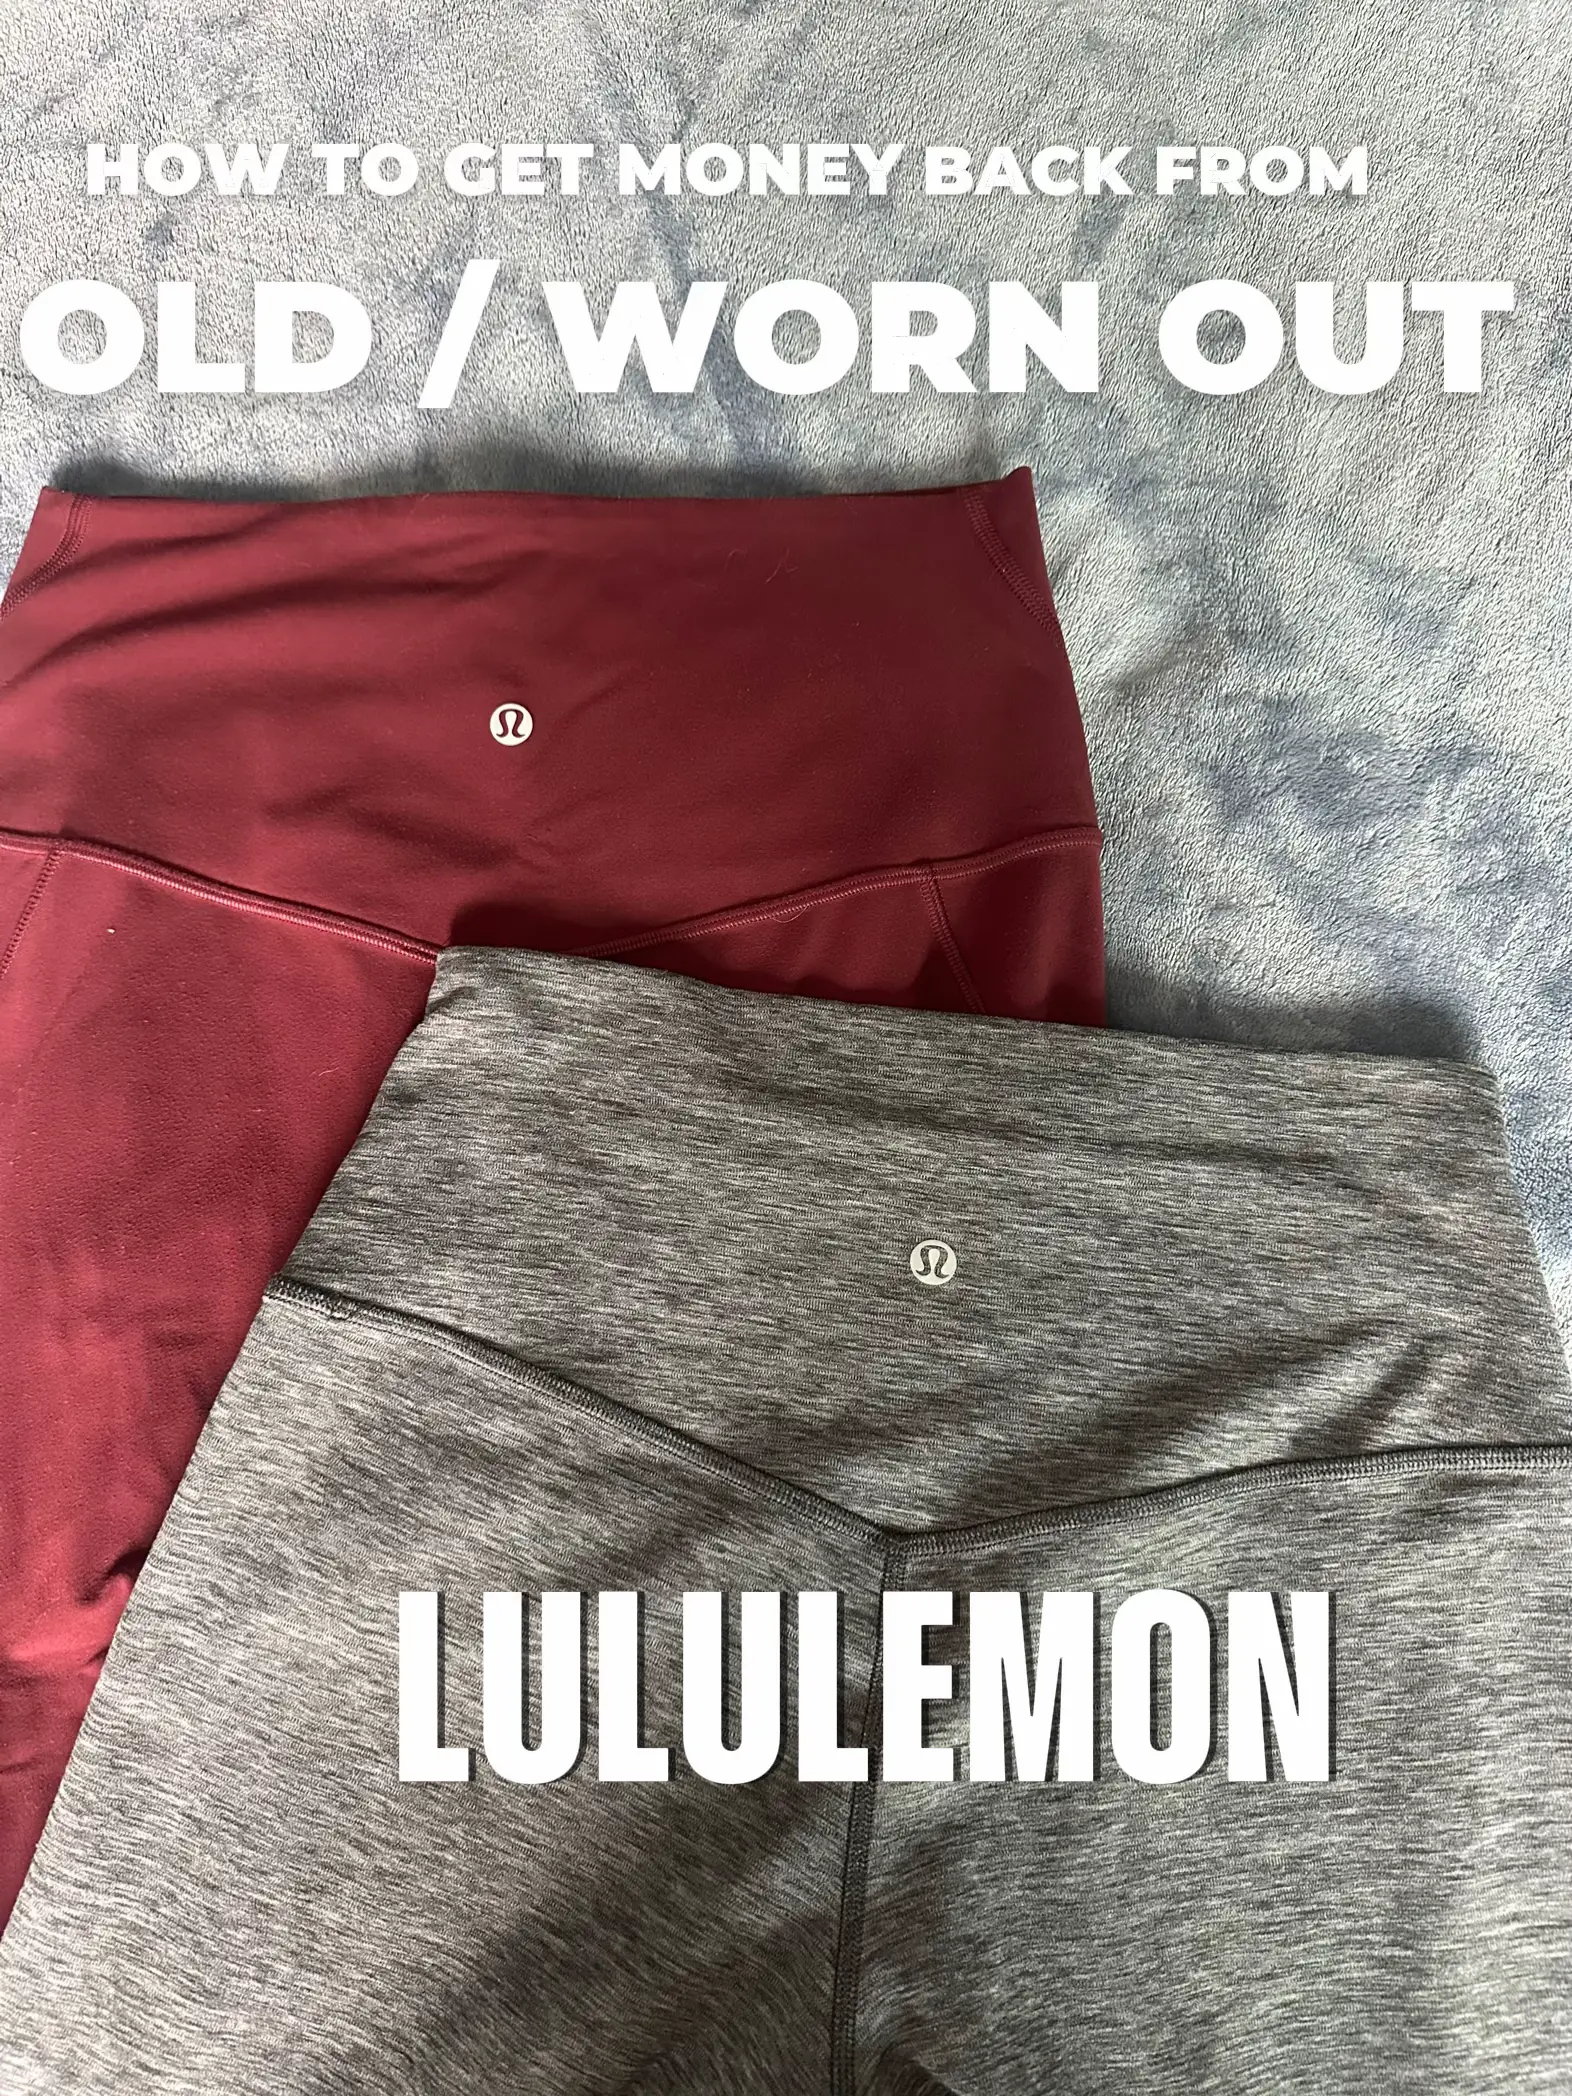 Lululemon Refund Process - Lemon8 Search